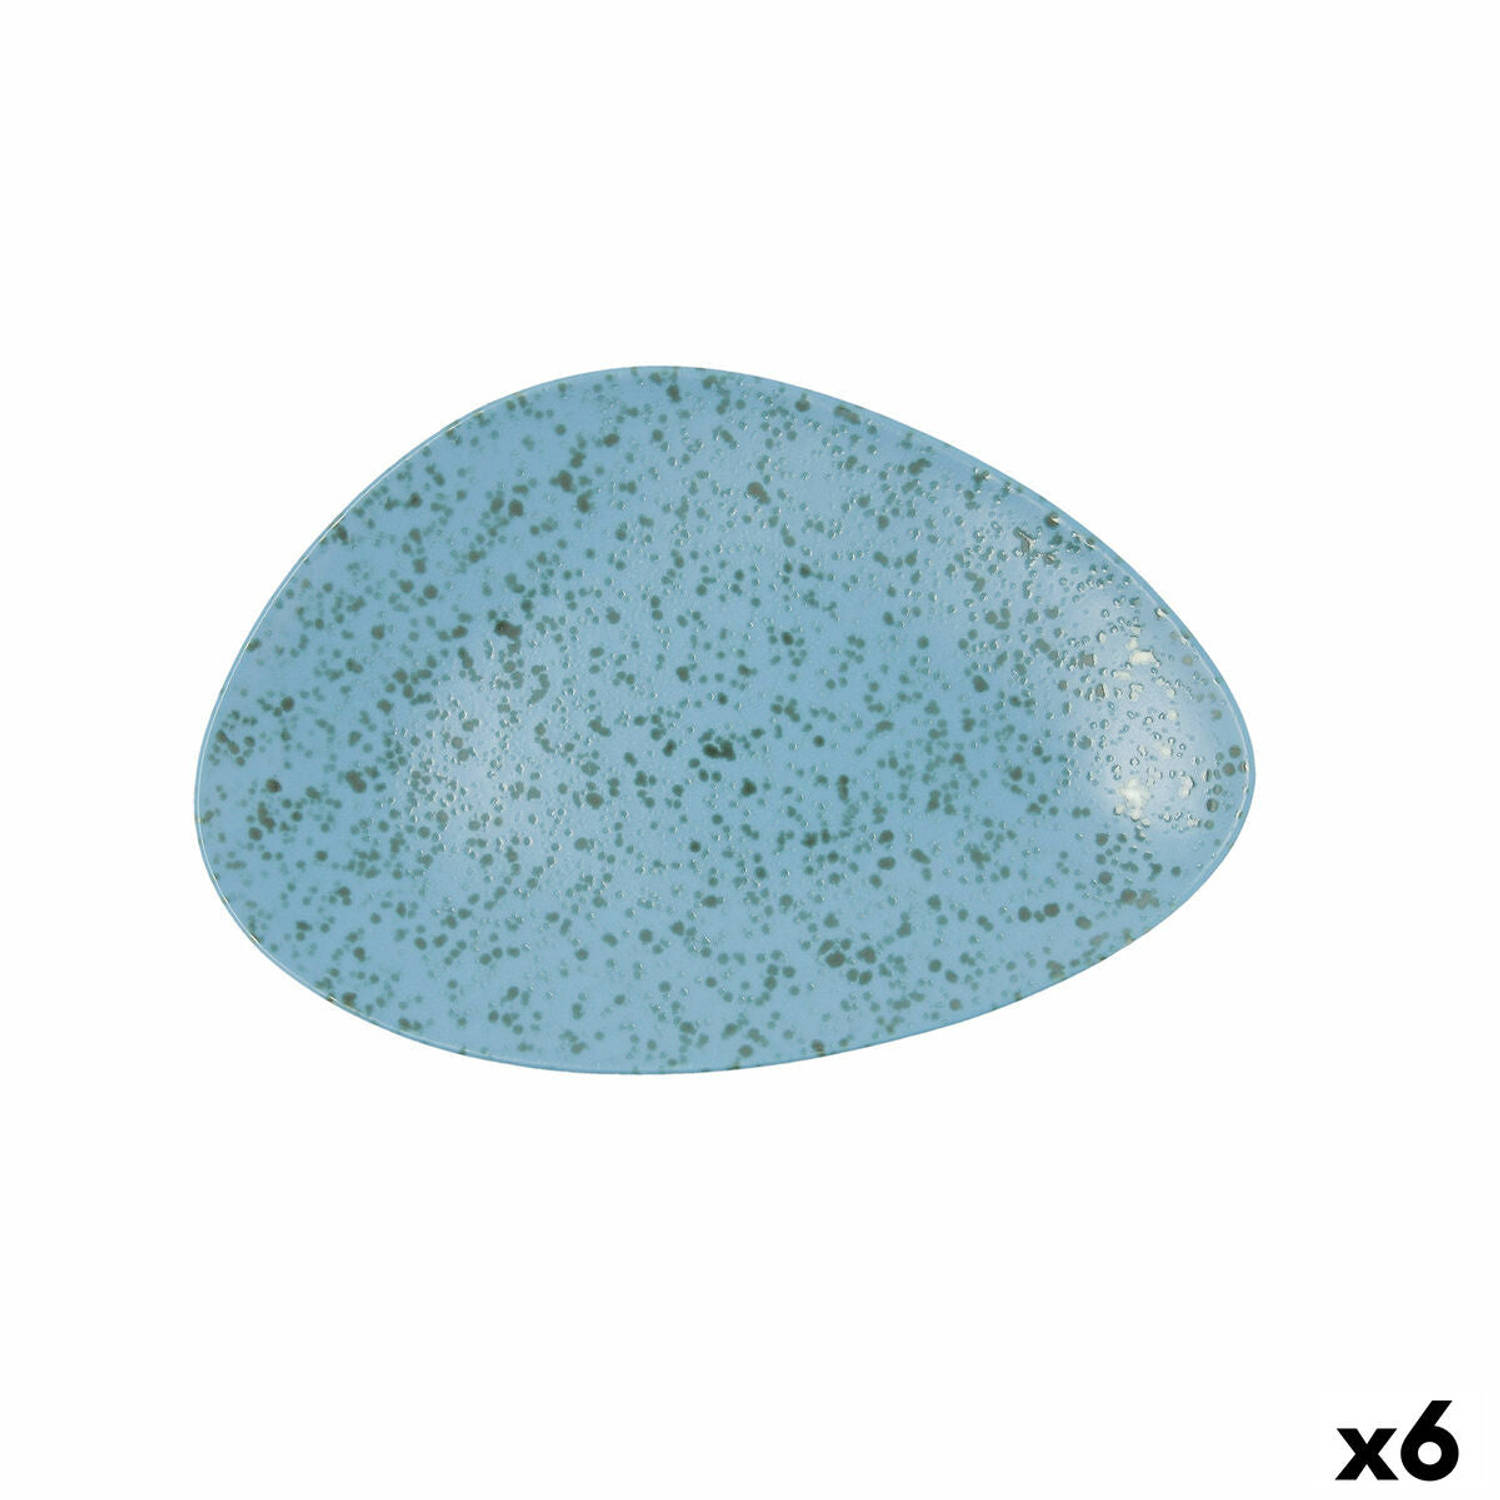 Eetbord Ariane Oxide Driehoekig Blauw Keramisch Ø 29 cm (6 Stuks)